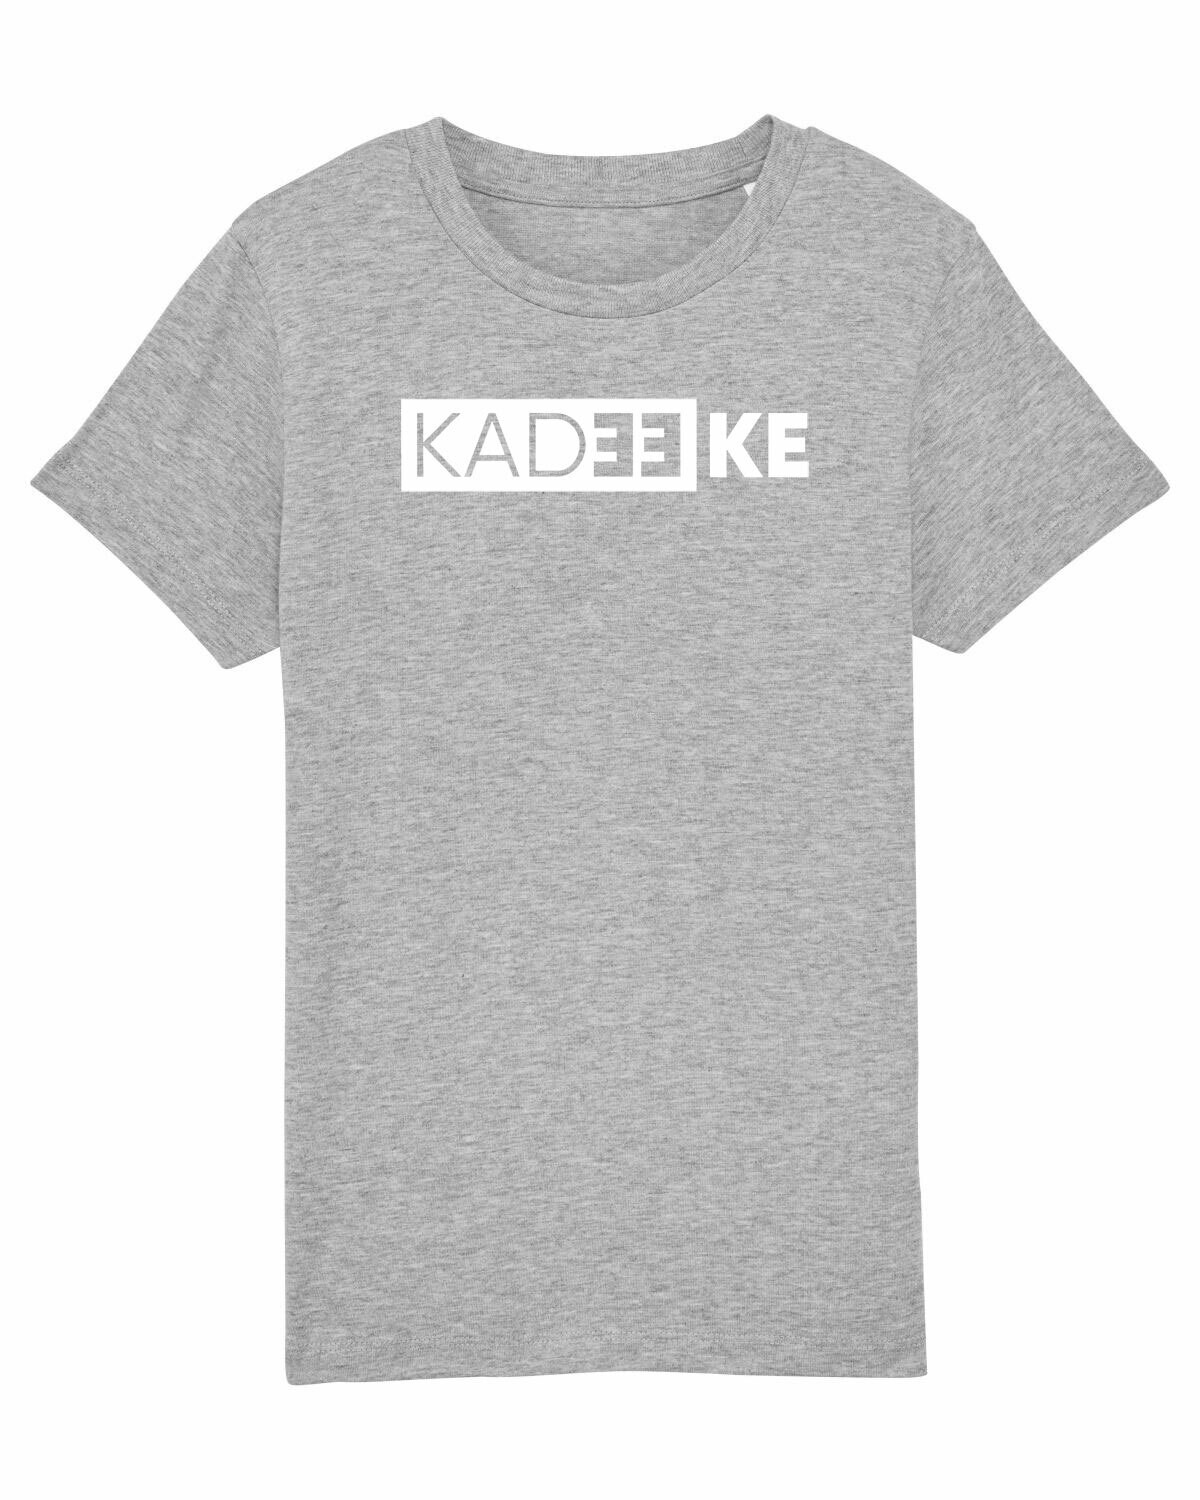 Kids T-shirt Kadeeke